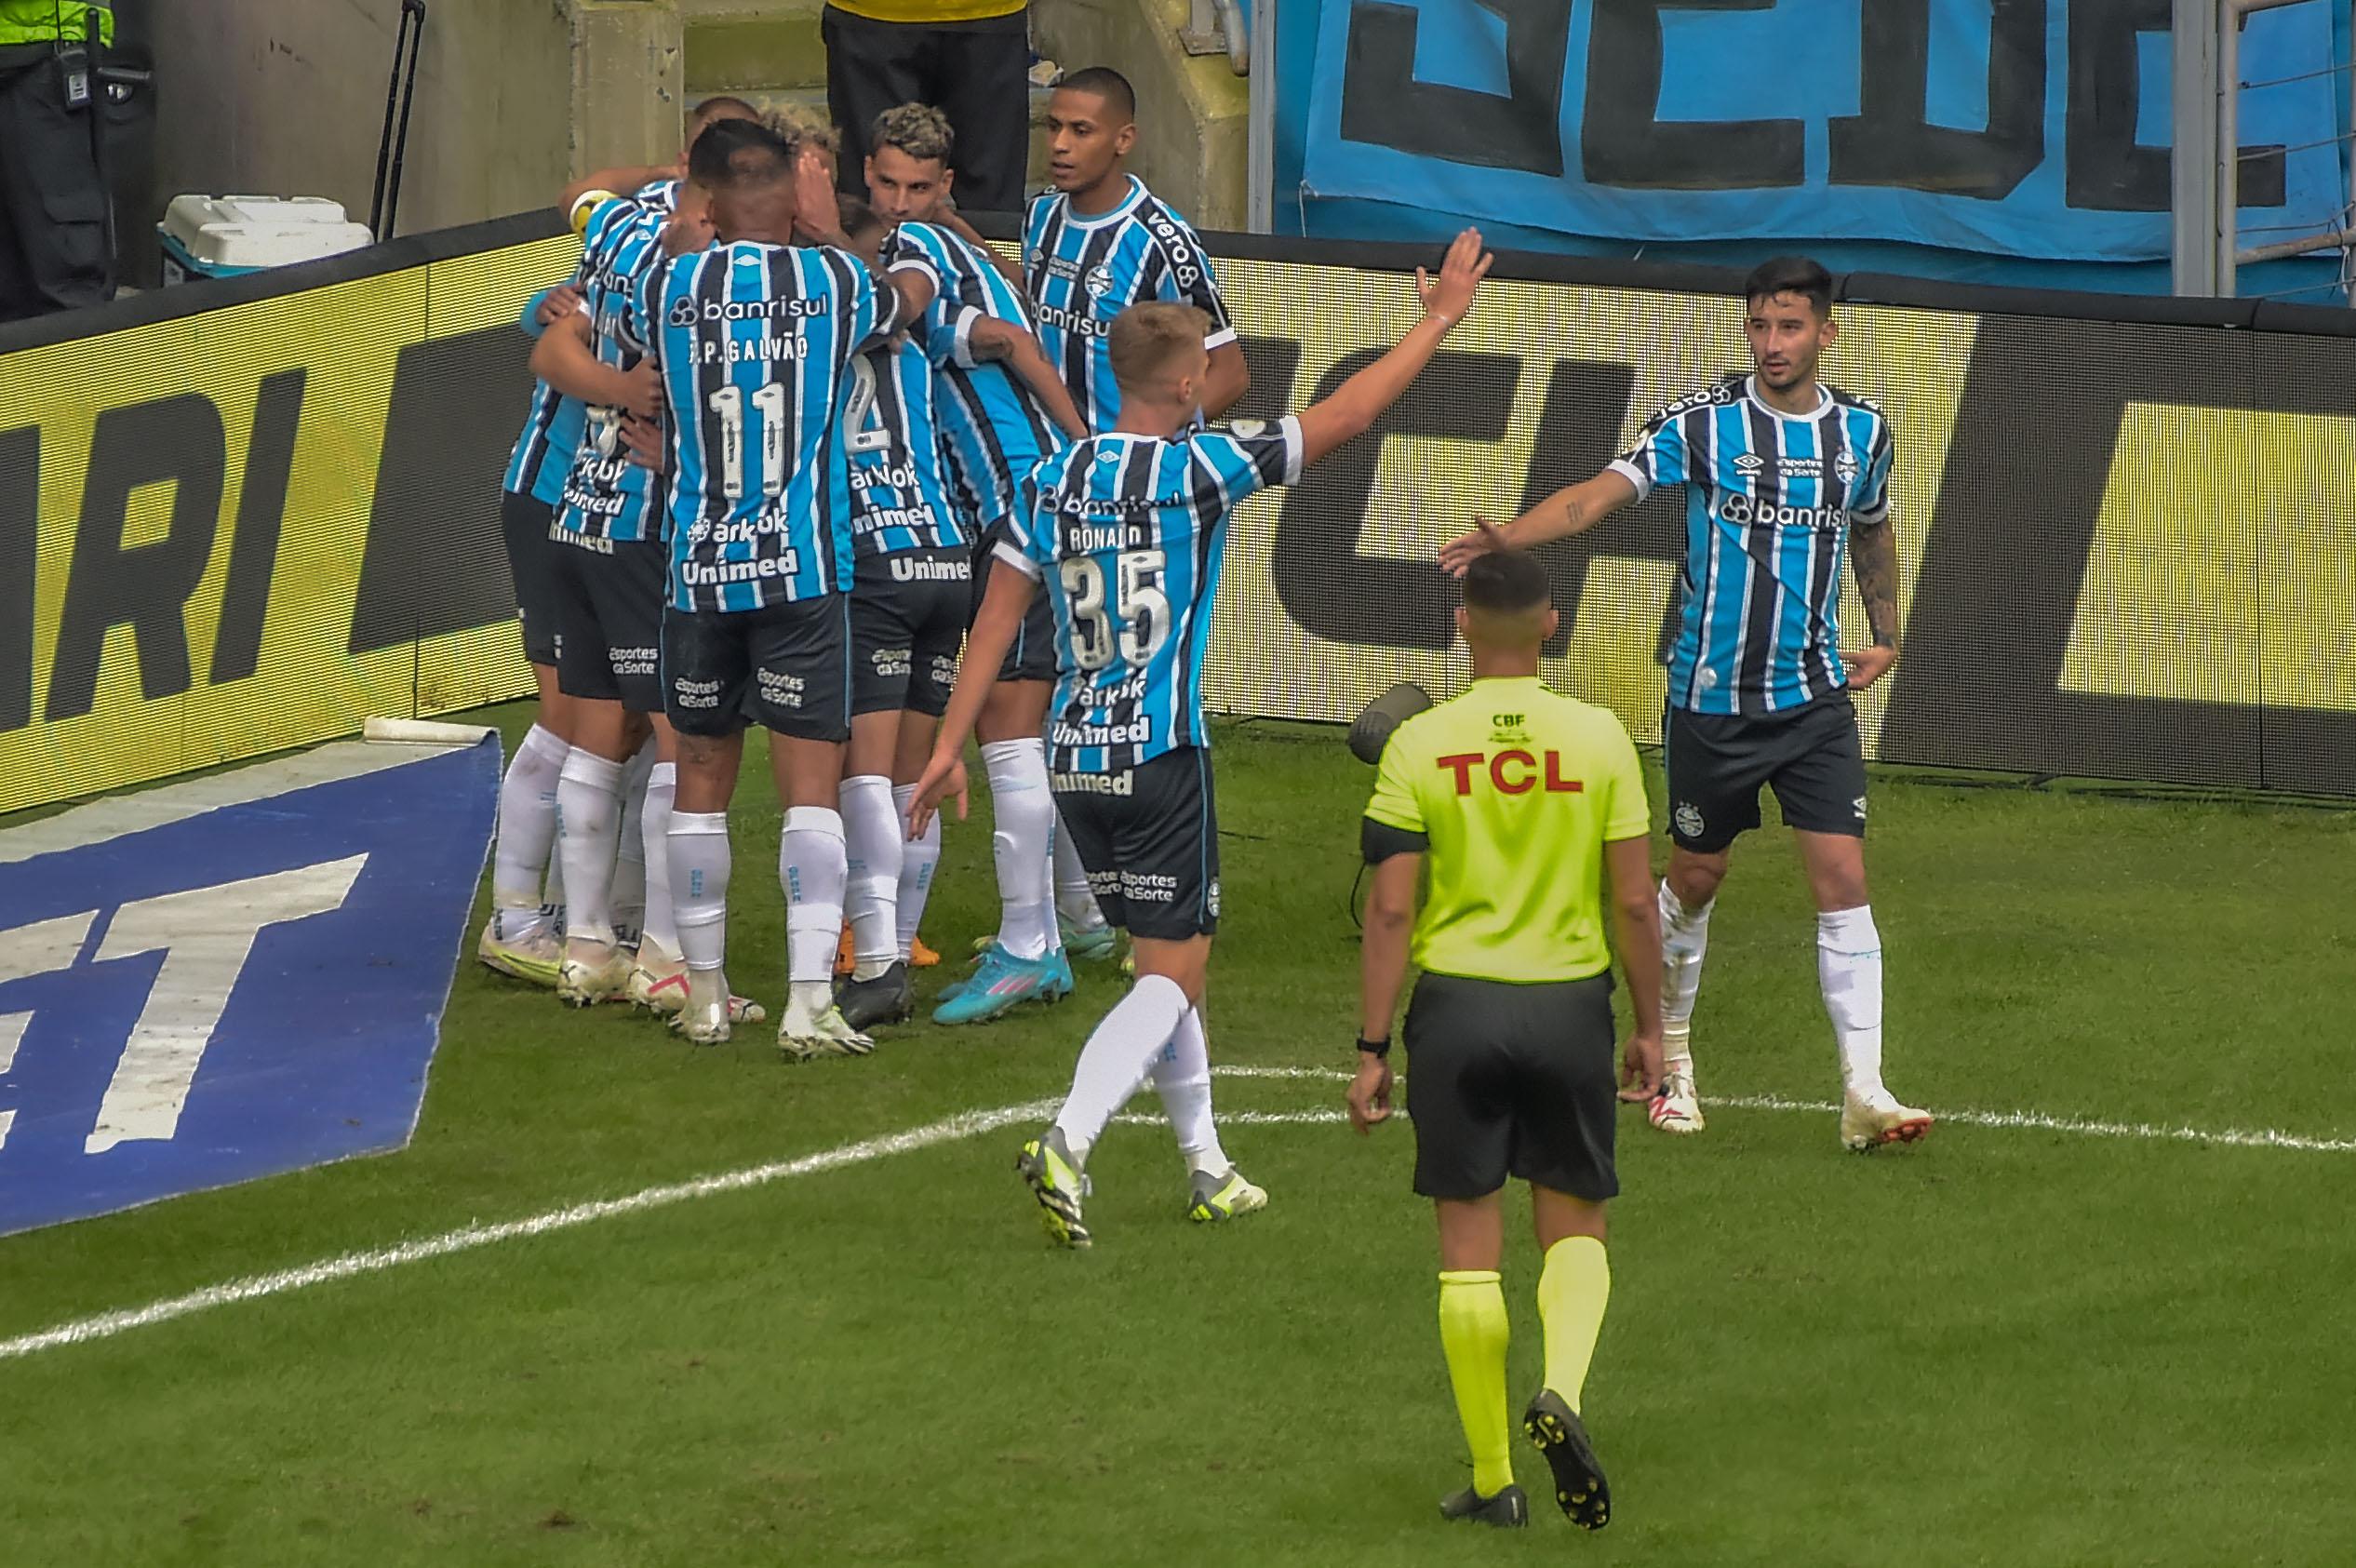 Veja próximos jogos do Grêmio pelo Campeonato Brasileiro